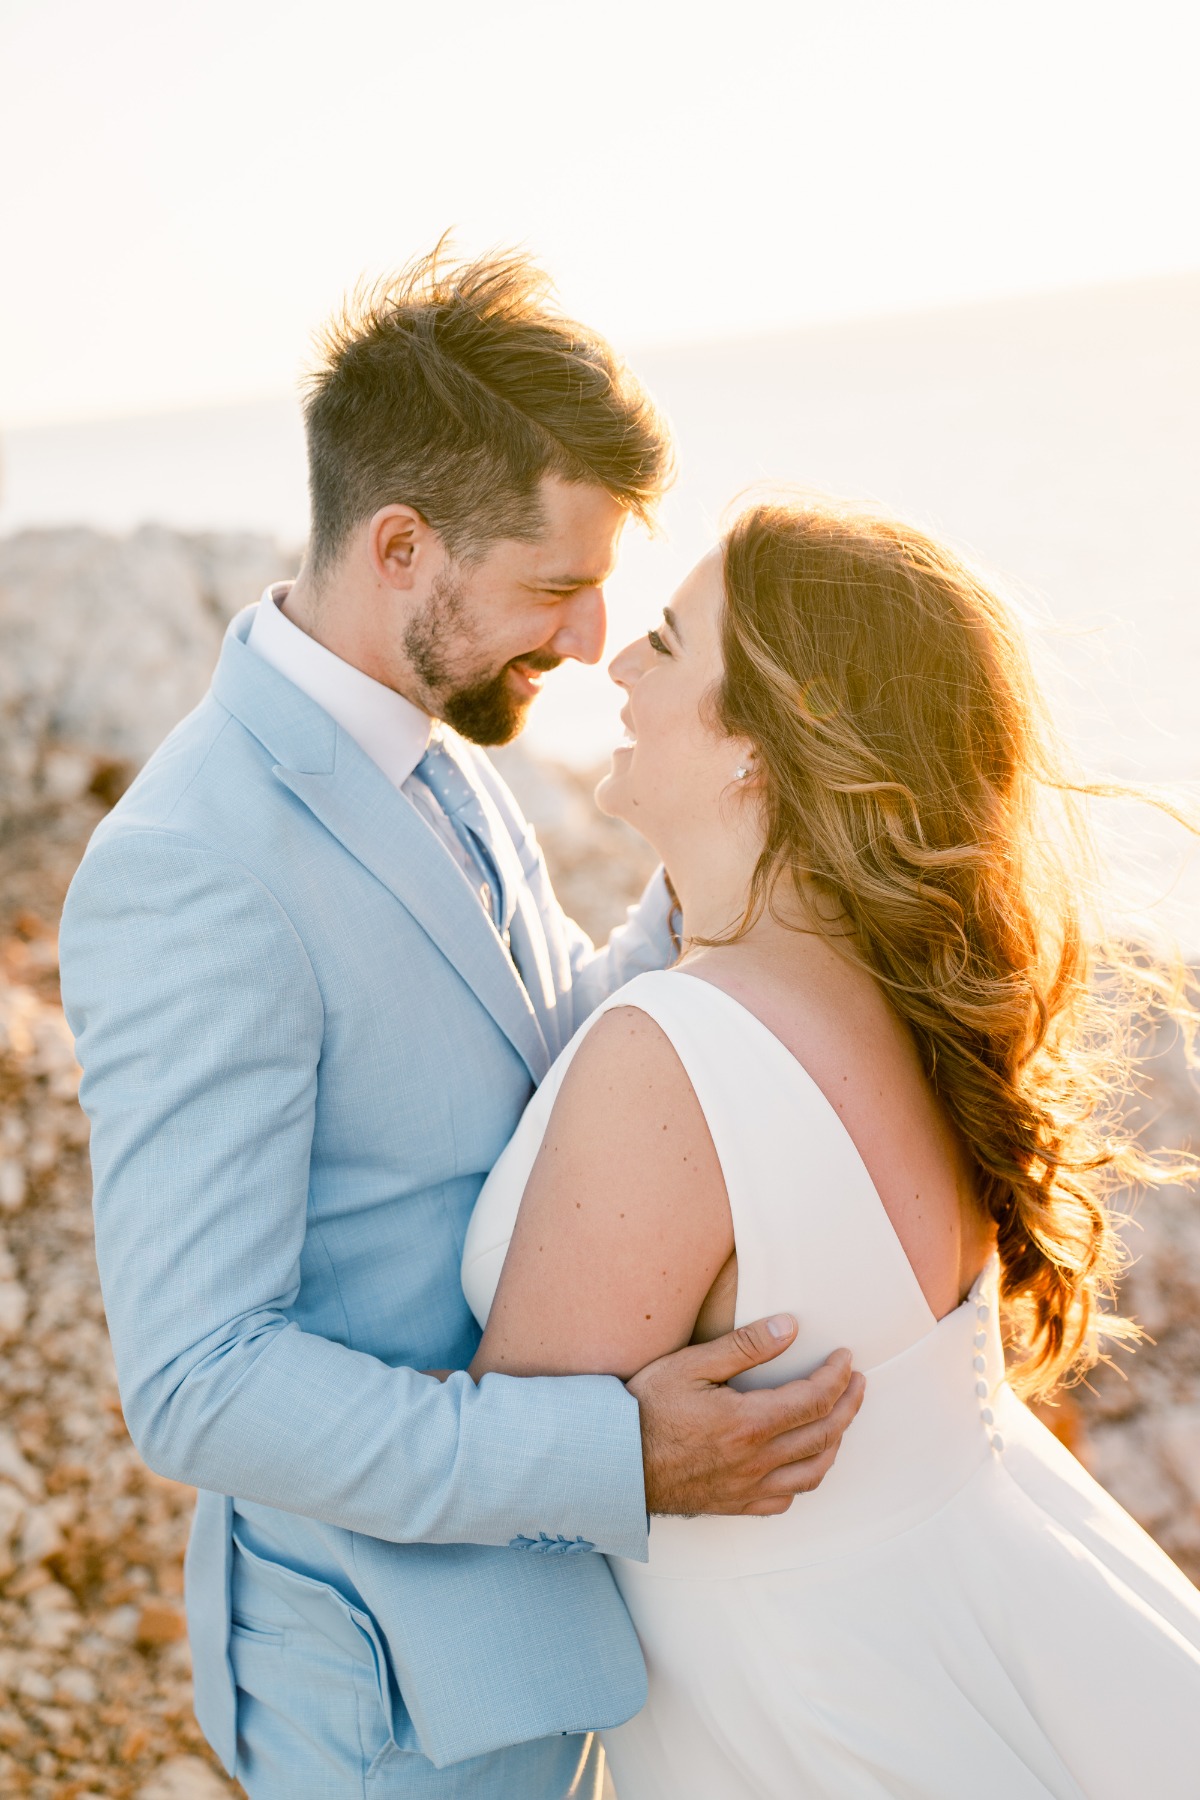 Glowing Canadian bride and groom at Greek island wedding 